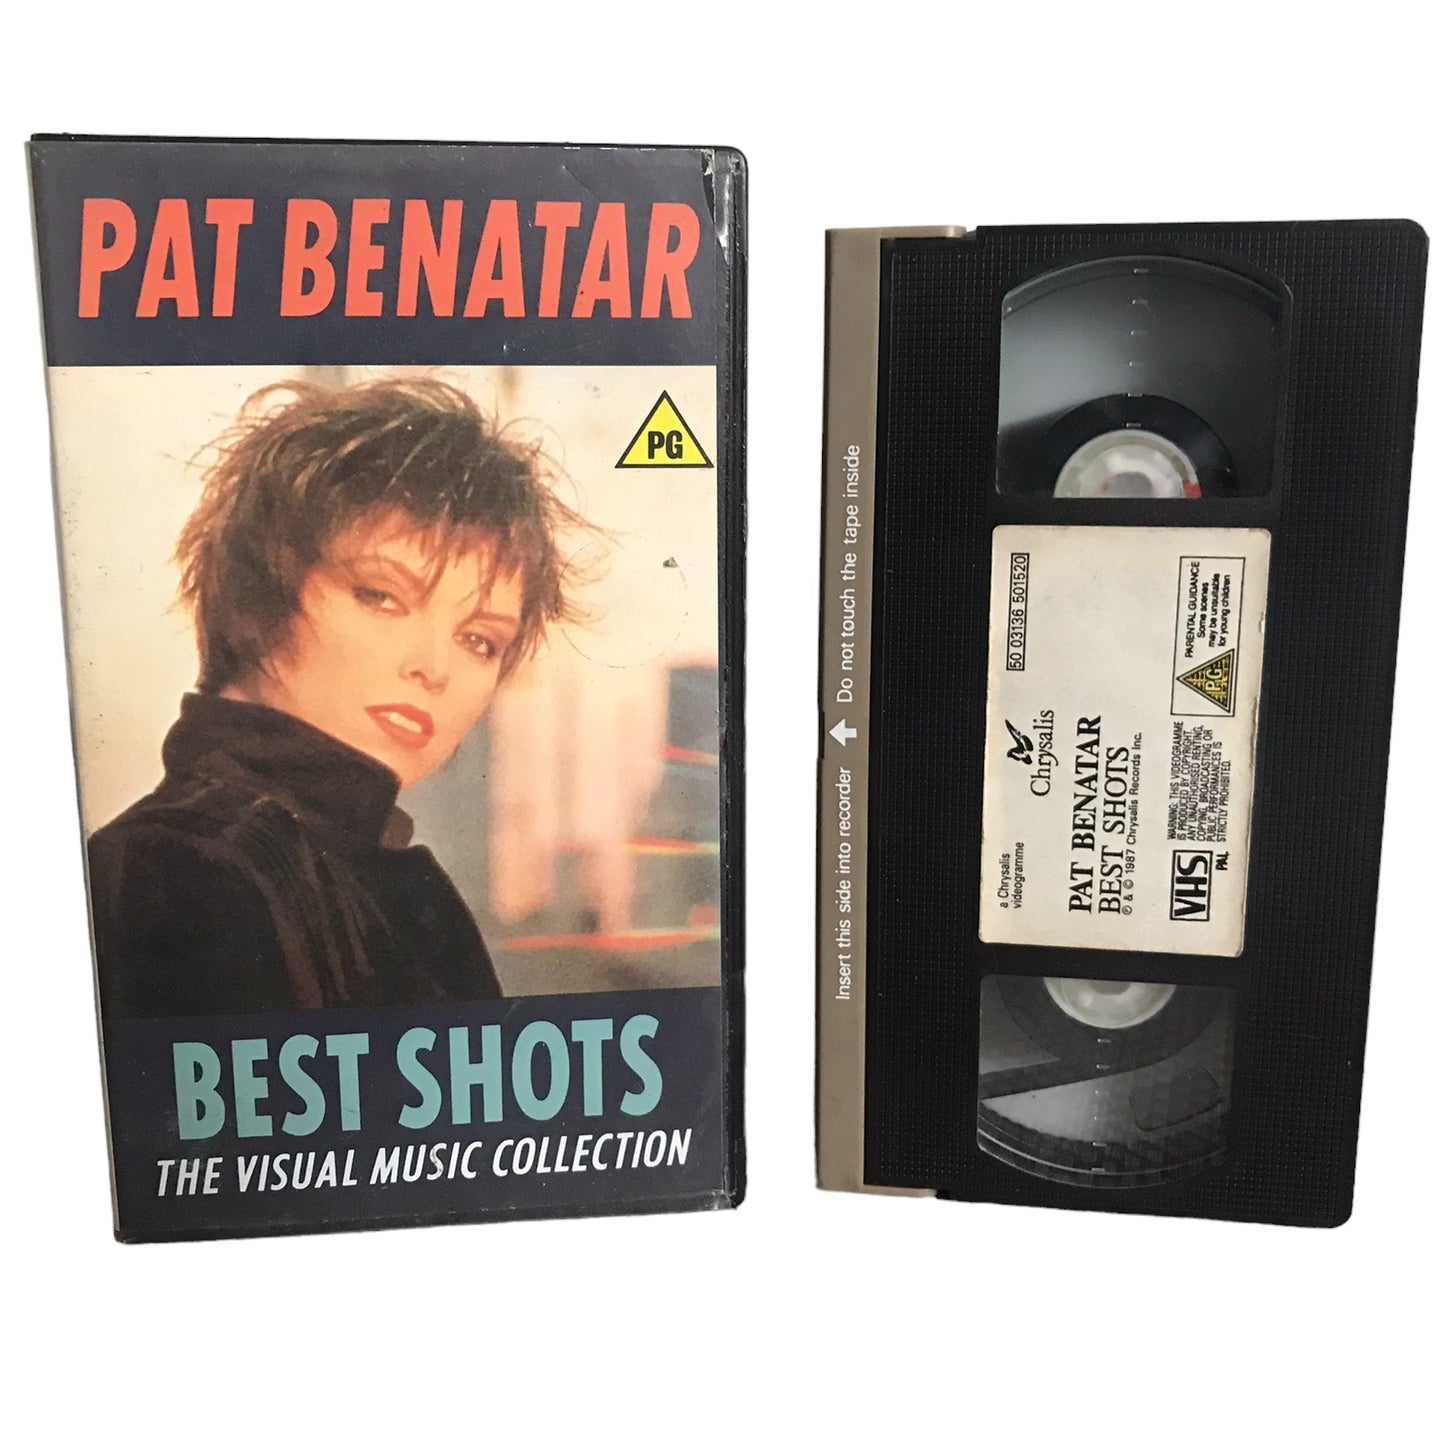 Pat Benatar Best Shots - Michael Peters - Chrysalis videogramme - Music - Pal - VHS-